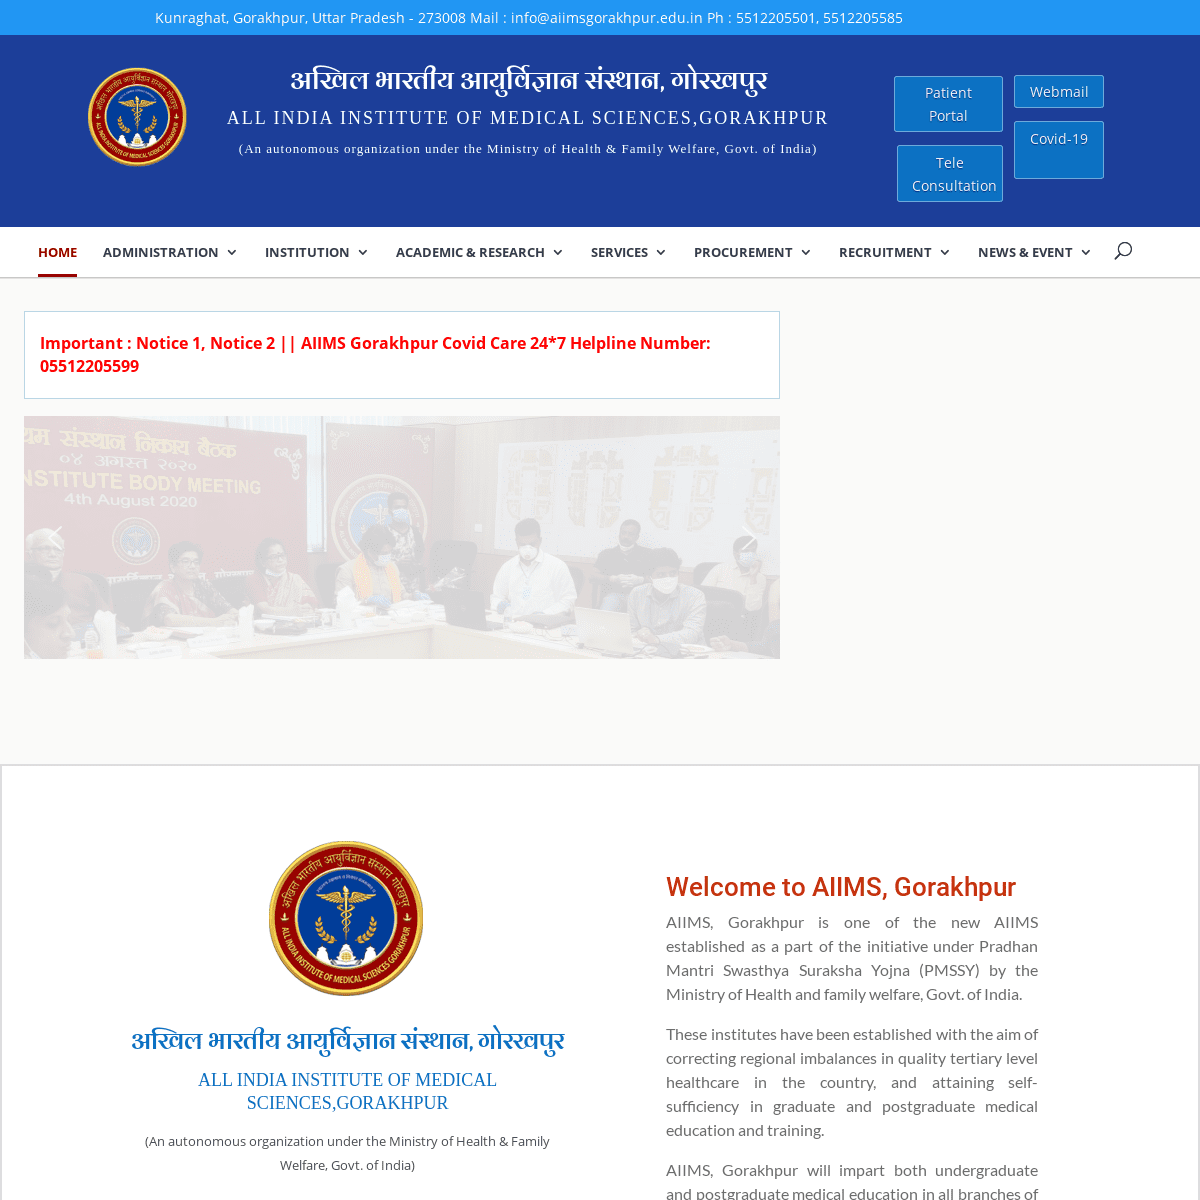 A complete backup of https://aiimsgorakhpur.edu.in